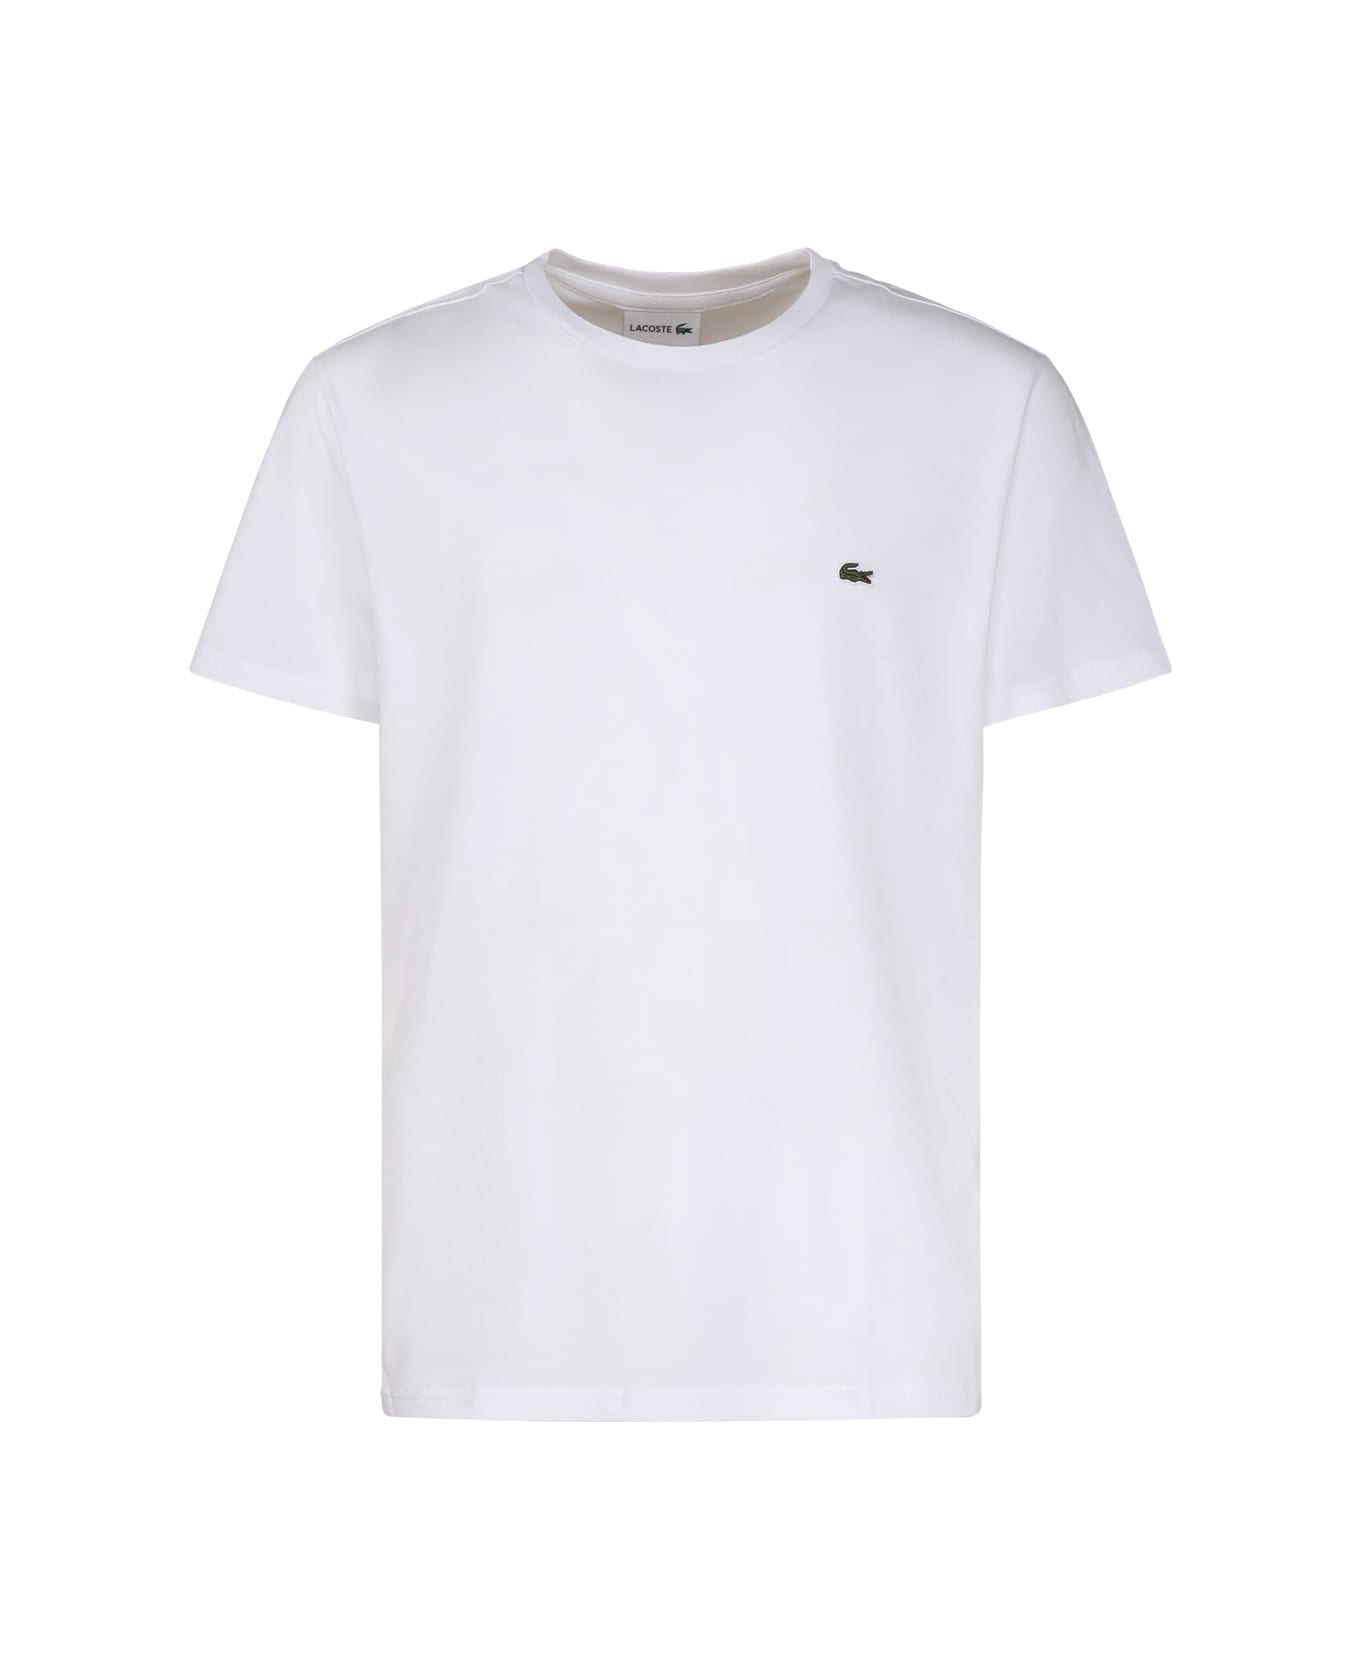 Lacoste T-shirt Polo Classic Lacoste - WHITE